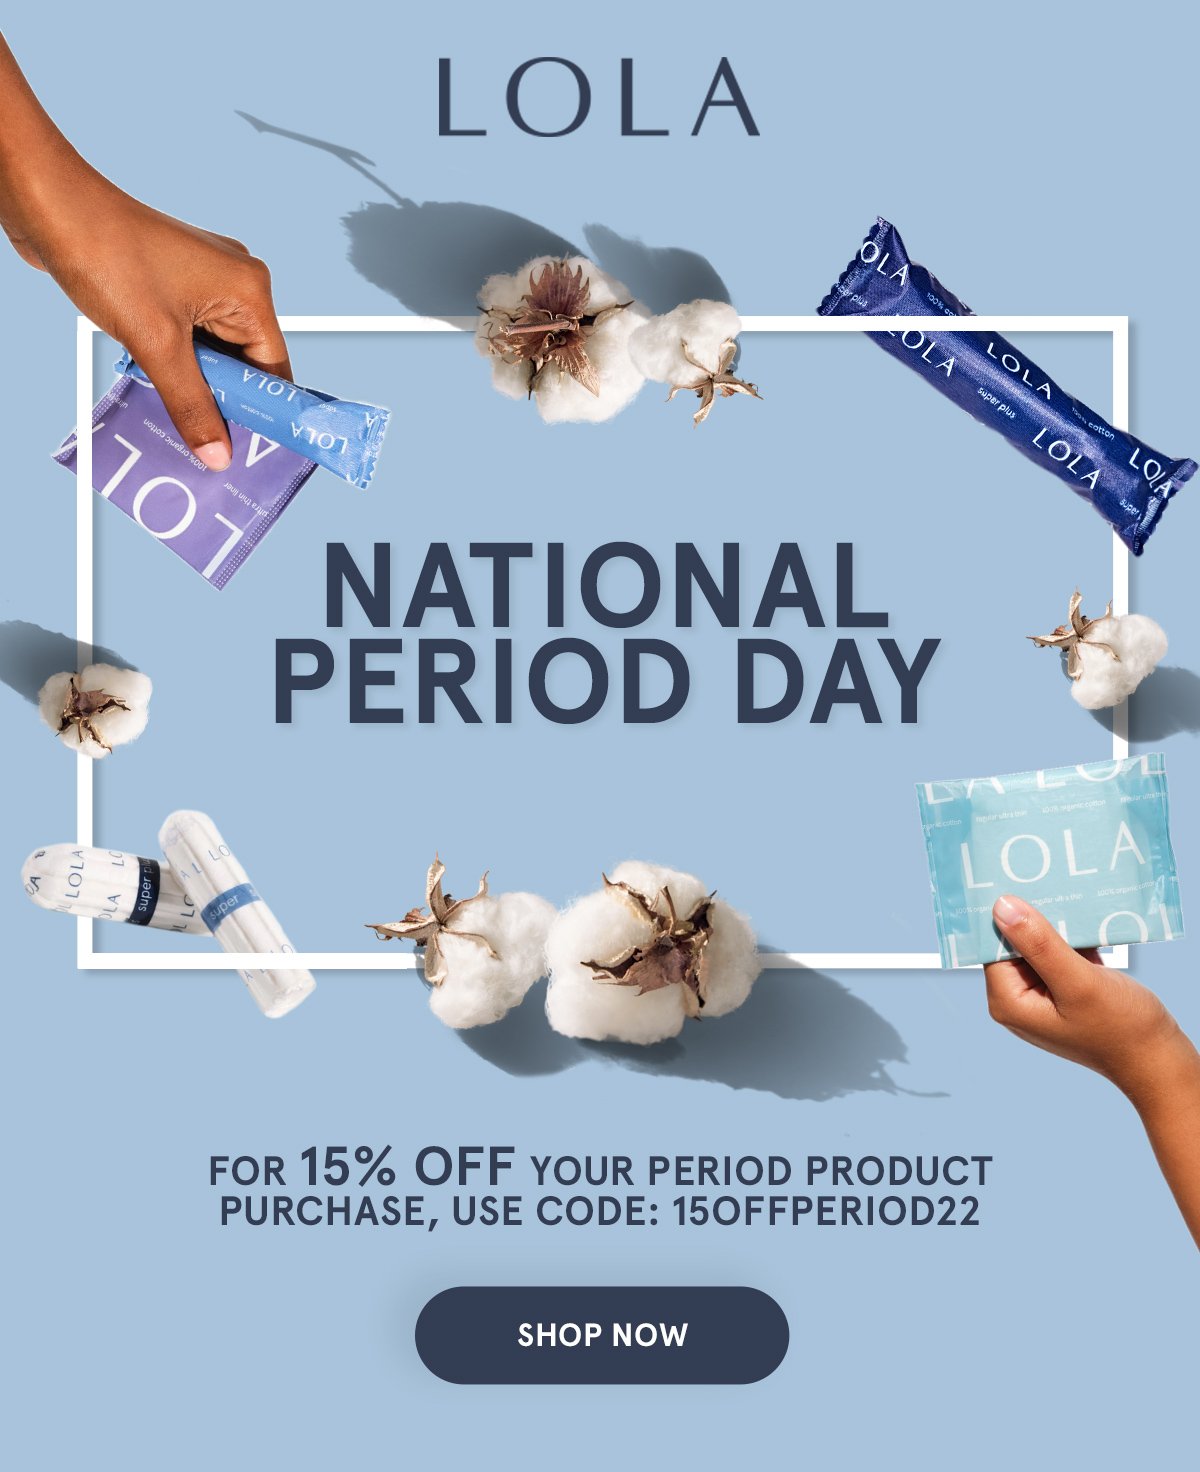 LOLA: Celebrate National Period Day